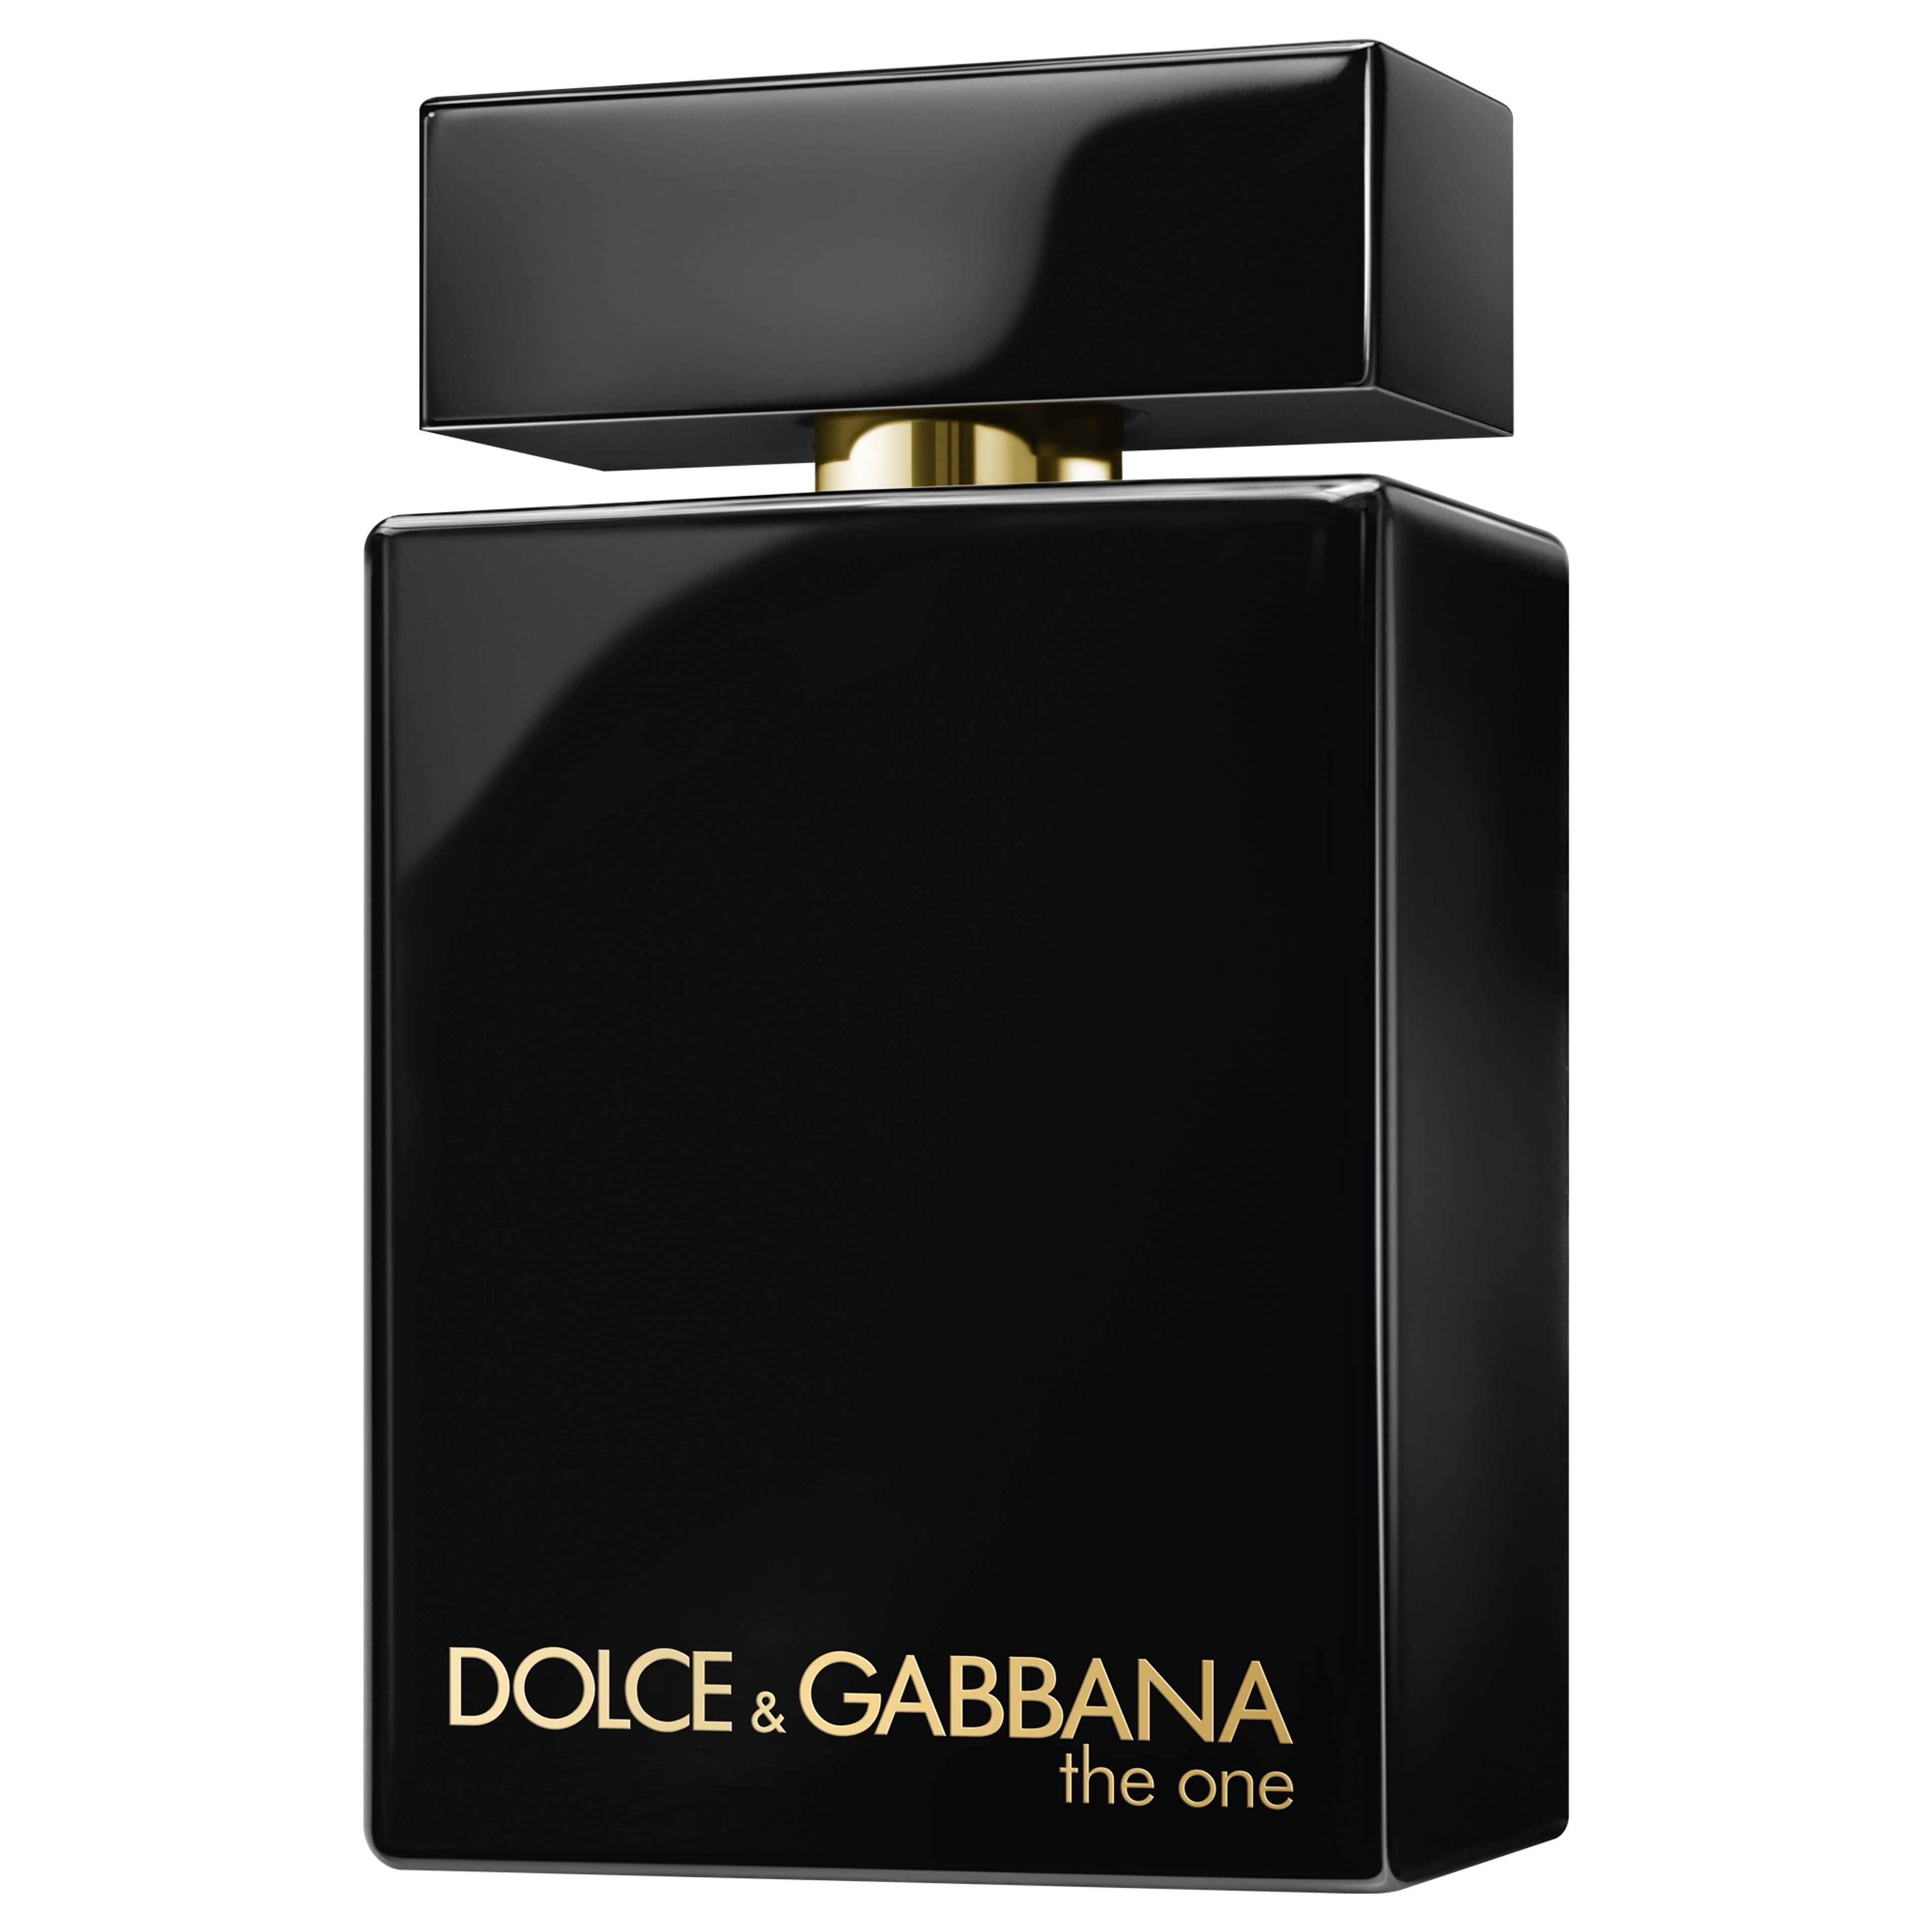 The One For Men Eau De Parfum Intense Dolce & Gabbana 3